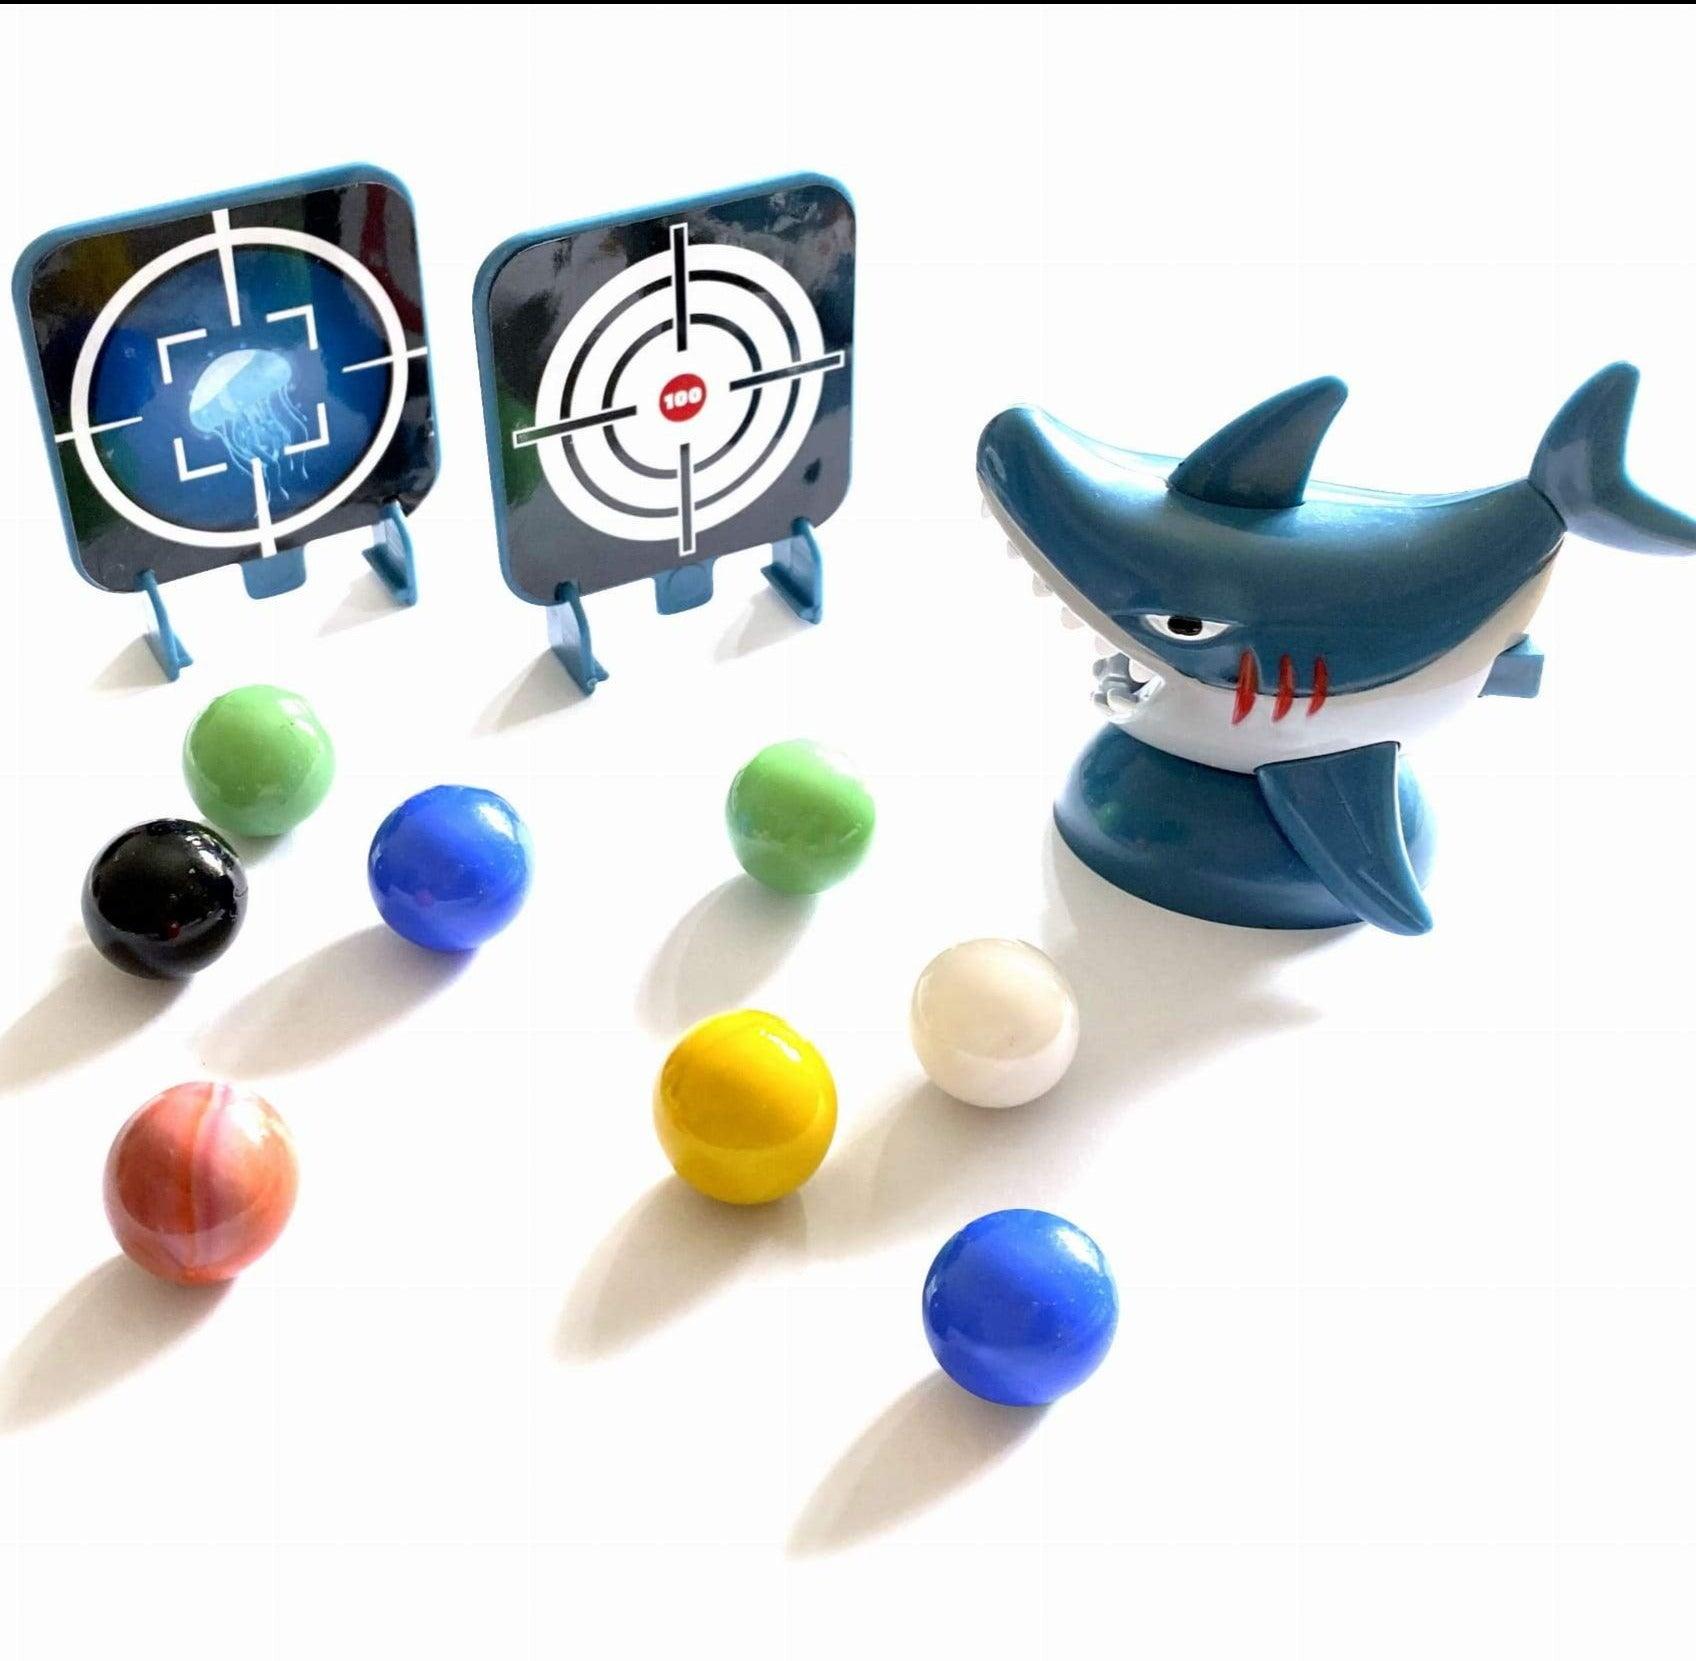 Buki: Shark Ball Launcher Arcade -peli